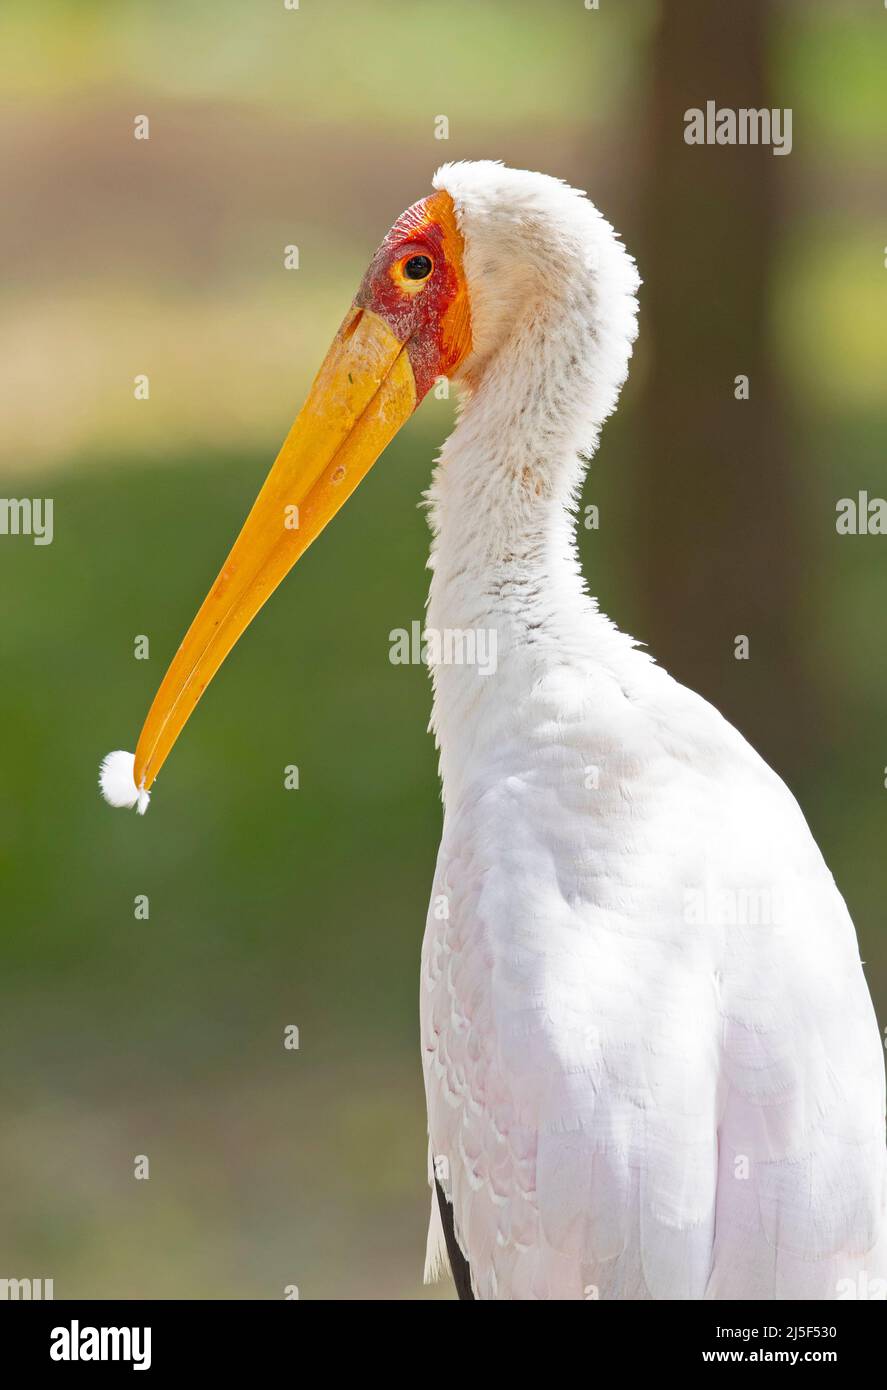 A portrait of a yellow-billed stork (Mycteria ibis) Stock Photo